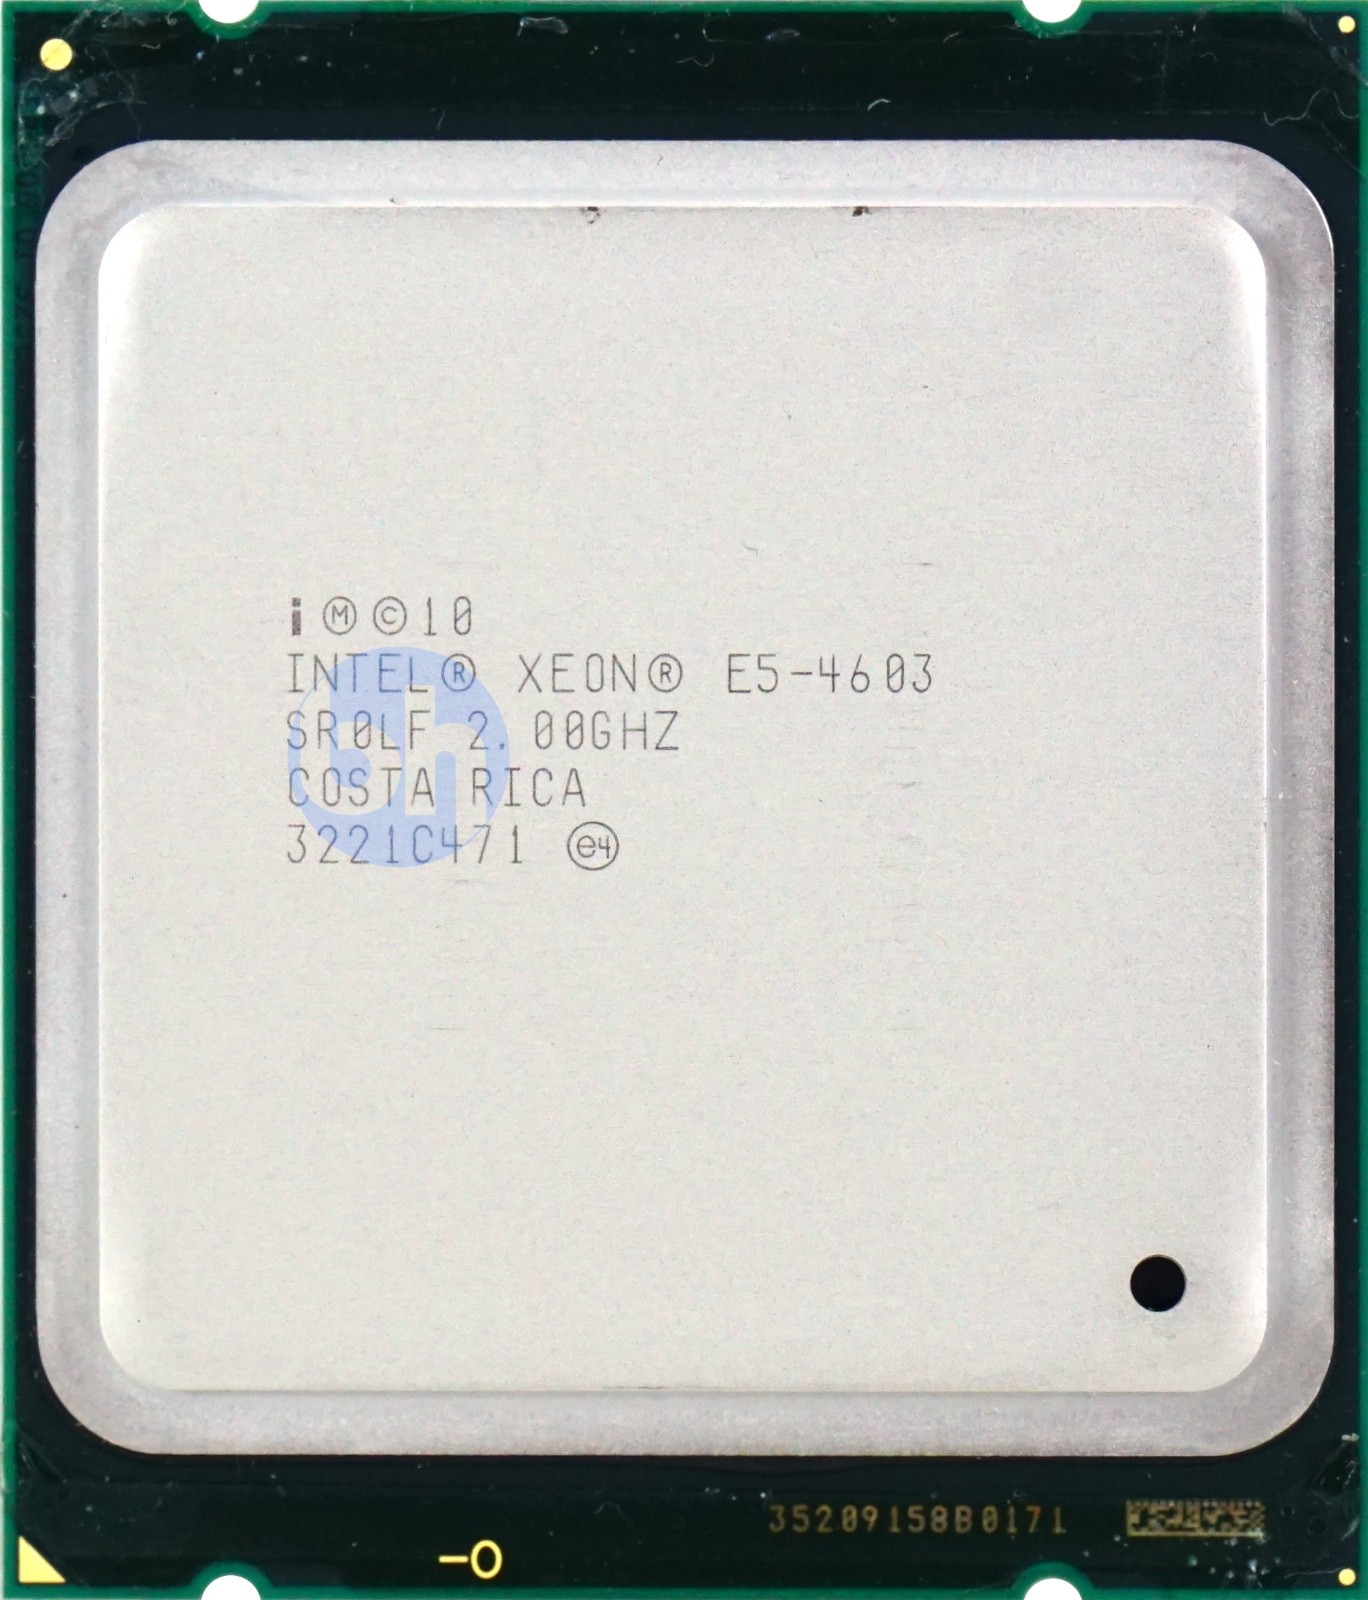 Intel Xeon E5-4603 V1 (SR0LF) 2.00Ghz Quad (4) Core LGA2011 95W CPU